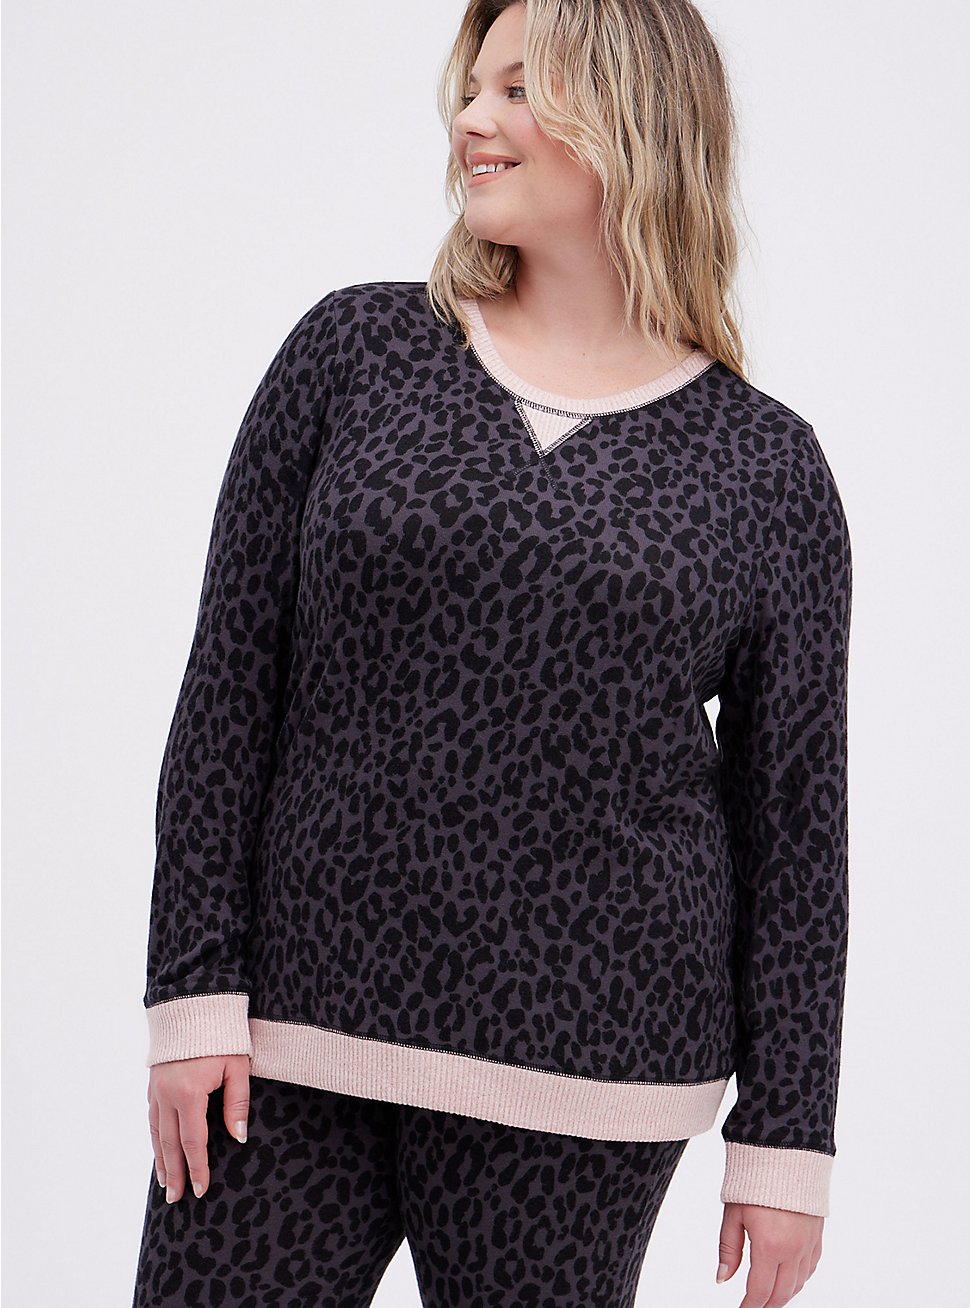 Sleep Sweatshirt - Super Soft Plush Leopard Black, MULTI, hi-res